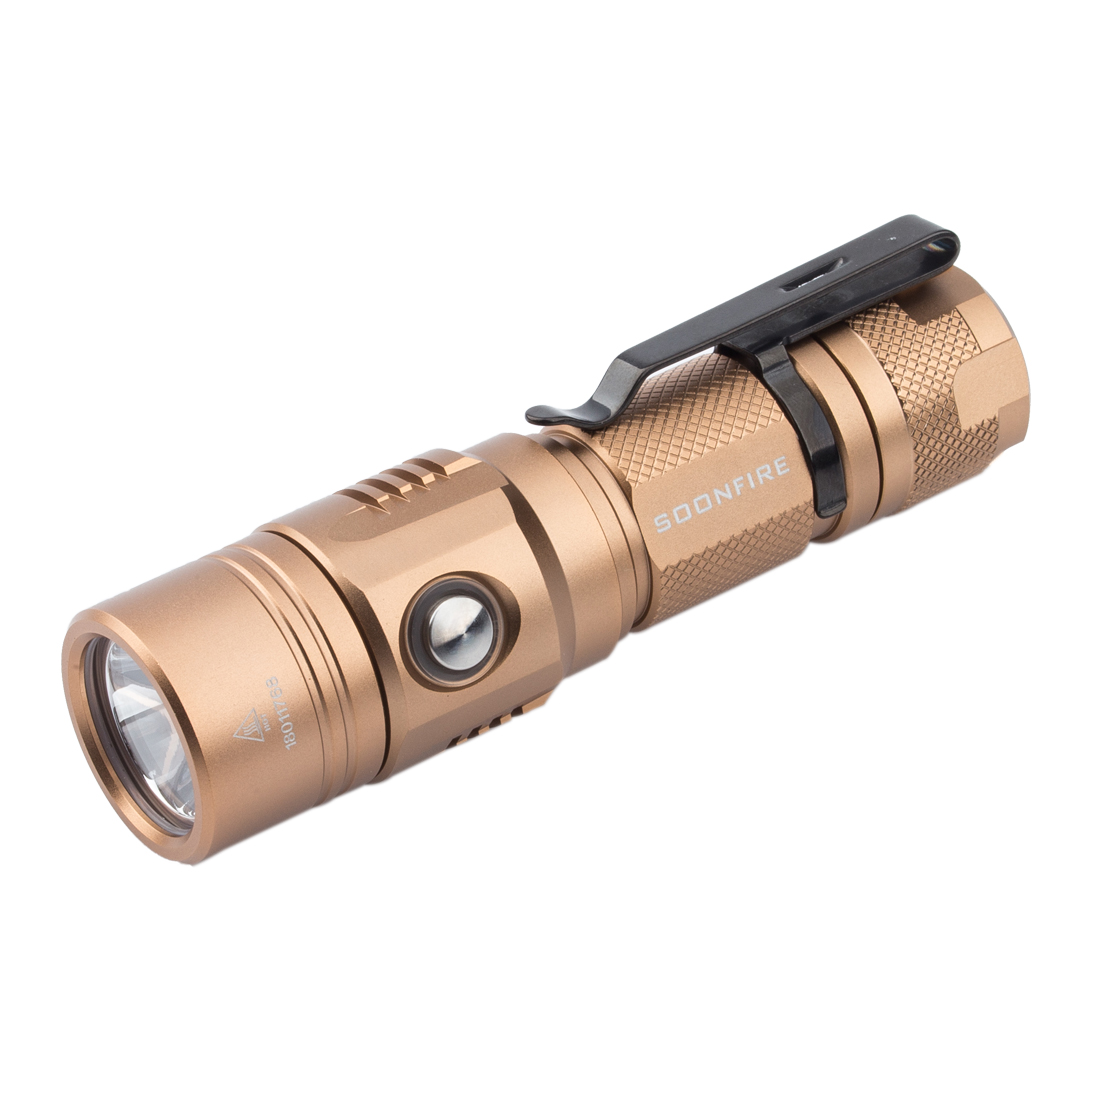 Soonfire E10 Super Bright Compact EDC Flashlight